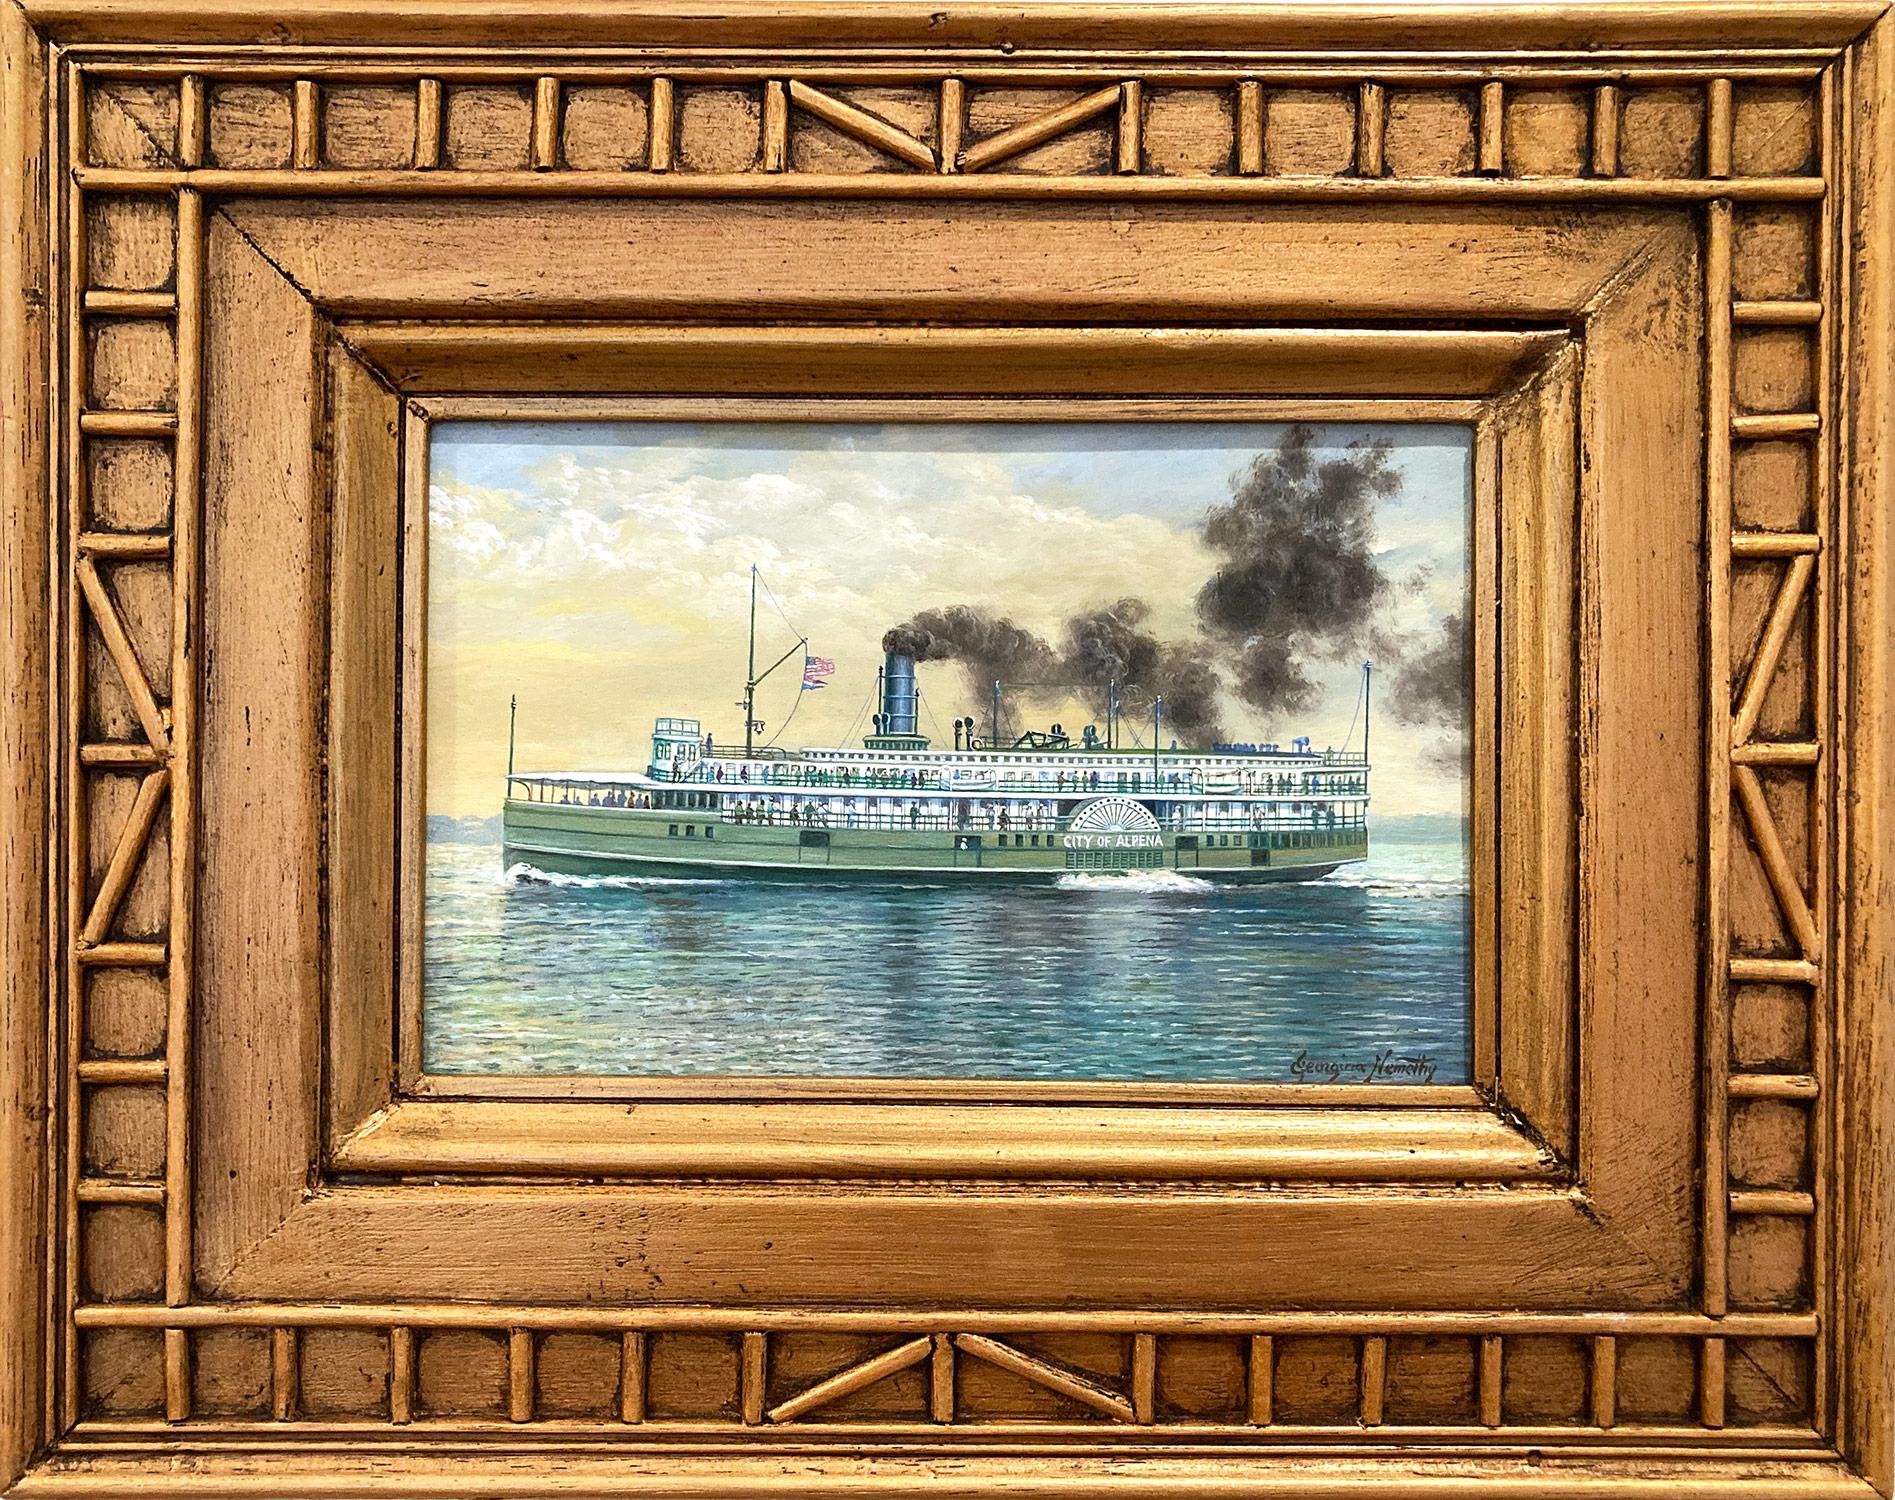 Georgina Nemethy Landscape Painting - "City of Alpena Steamer Ship" American Oil Painting on Board Miniature Details